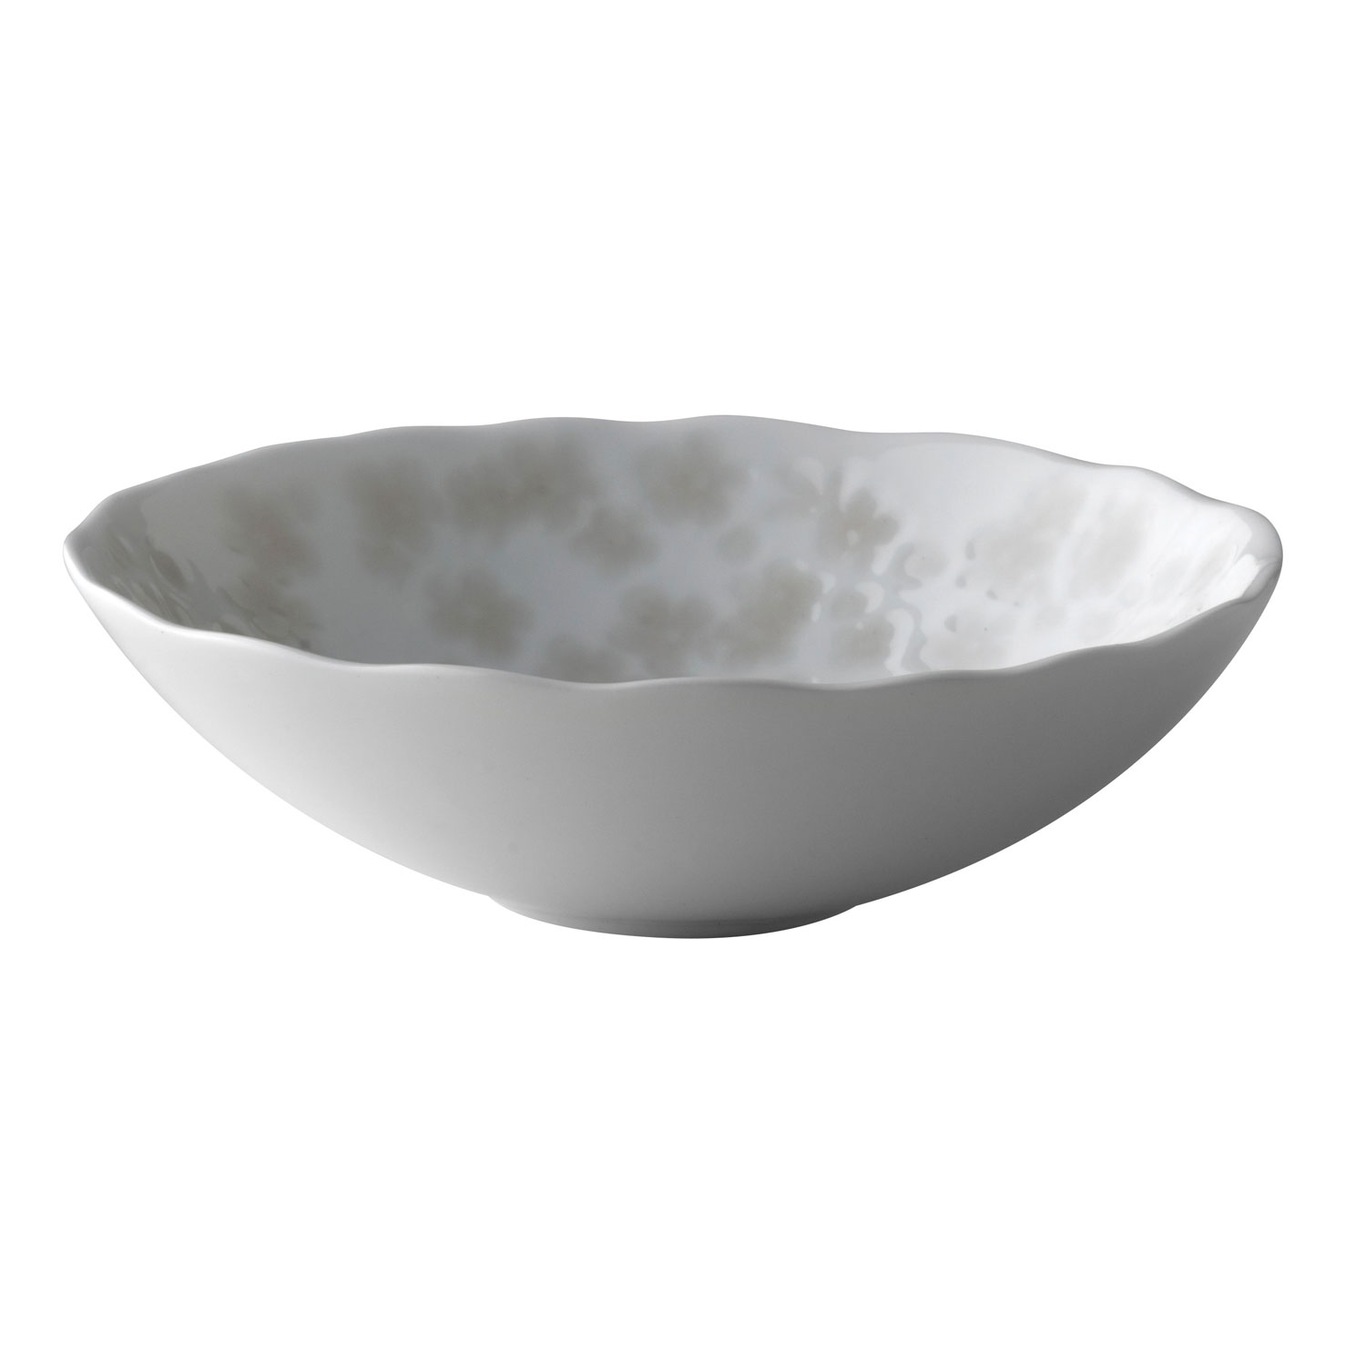 Slåpeblom Bowl 12 cm, Warm Grey